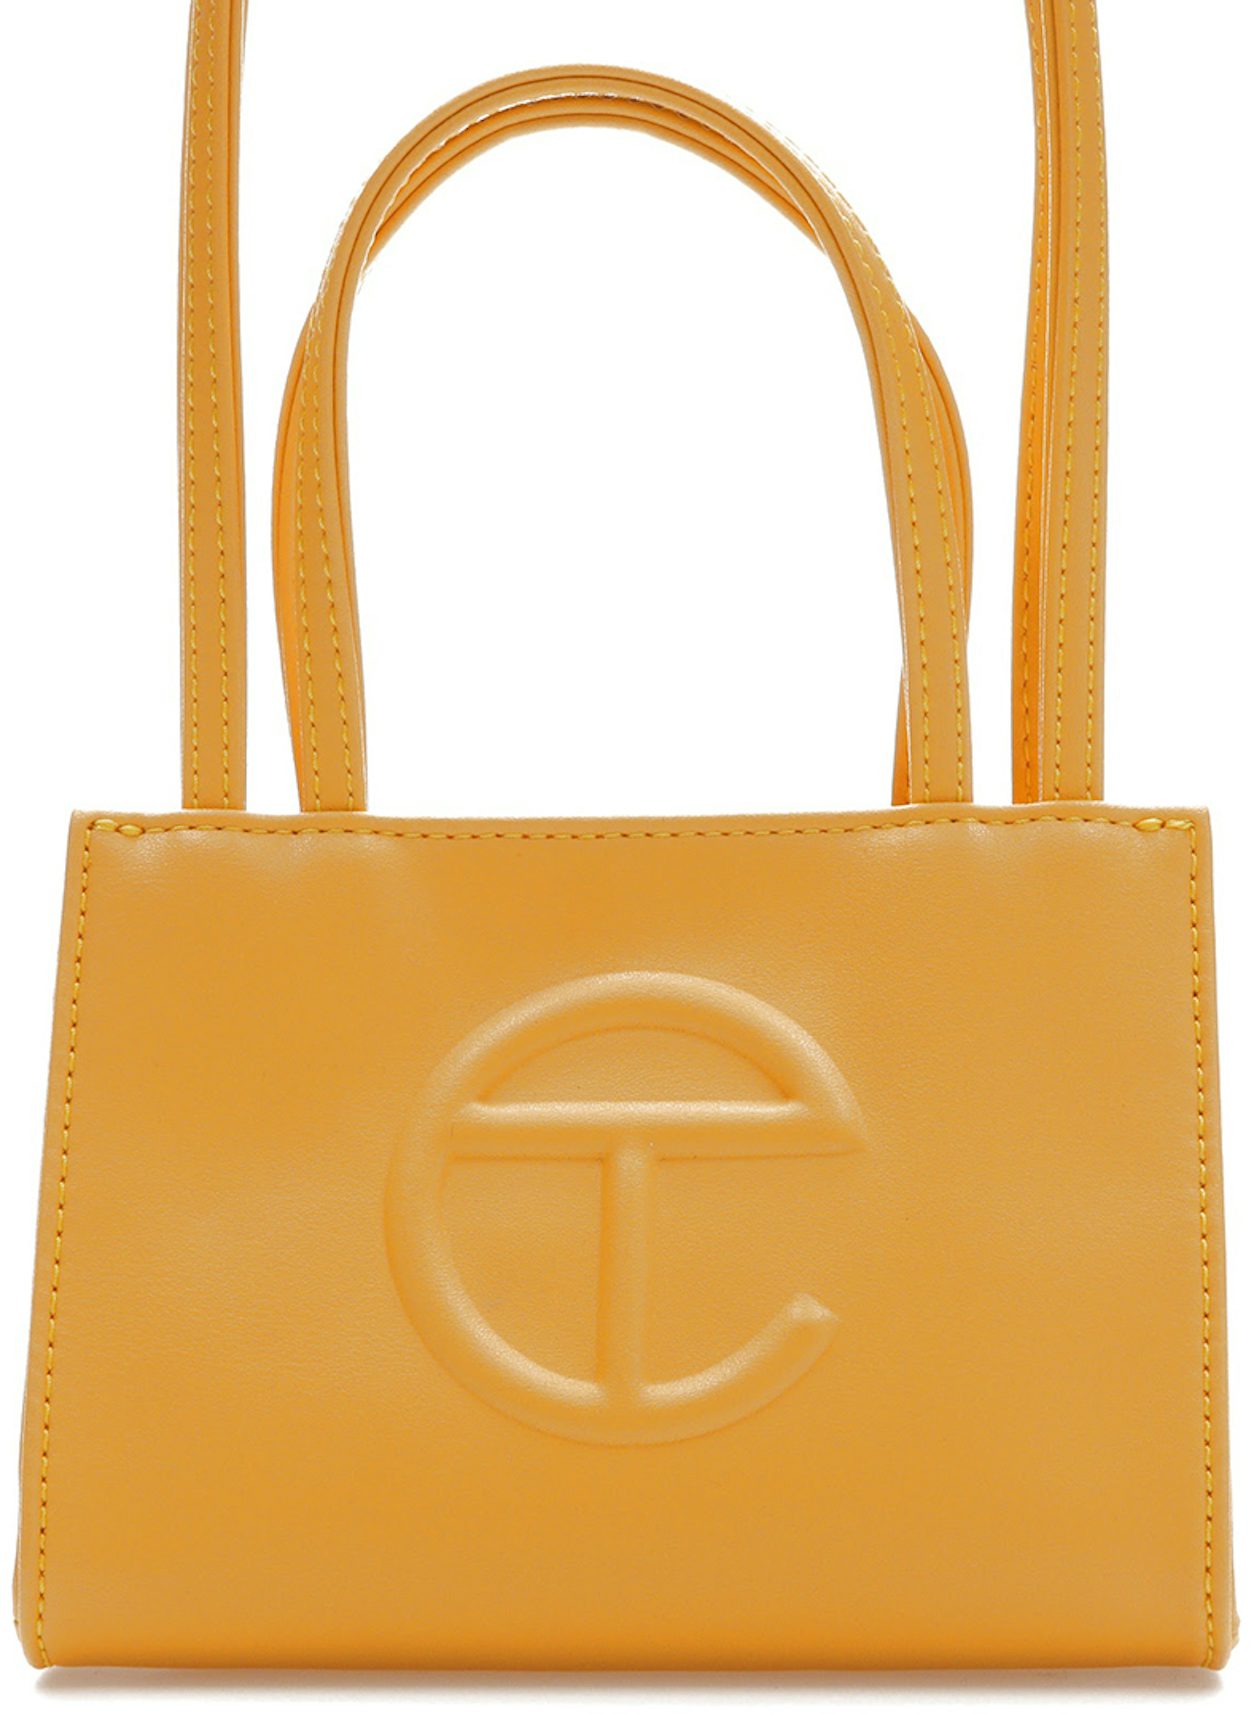 Sports Coach New York bag or purse in solid orange w/ adjustable strap